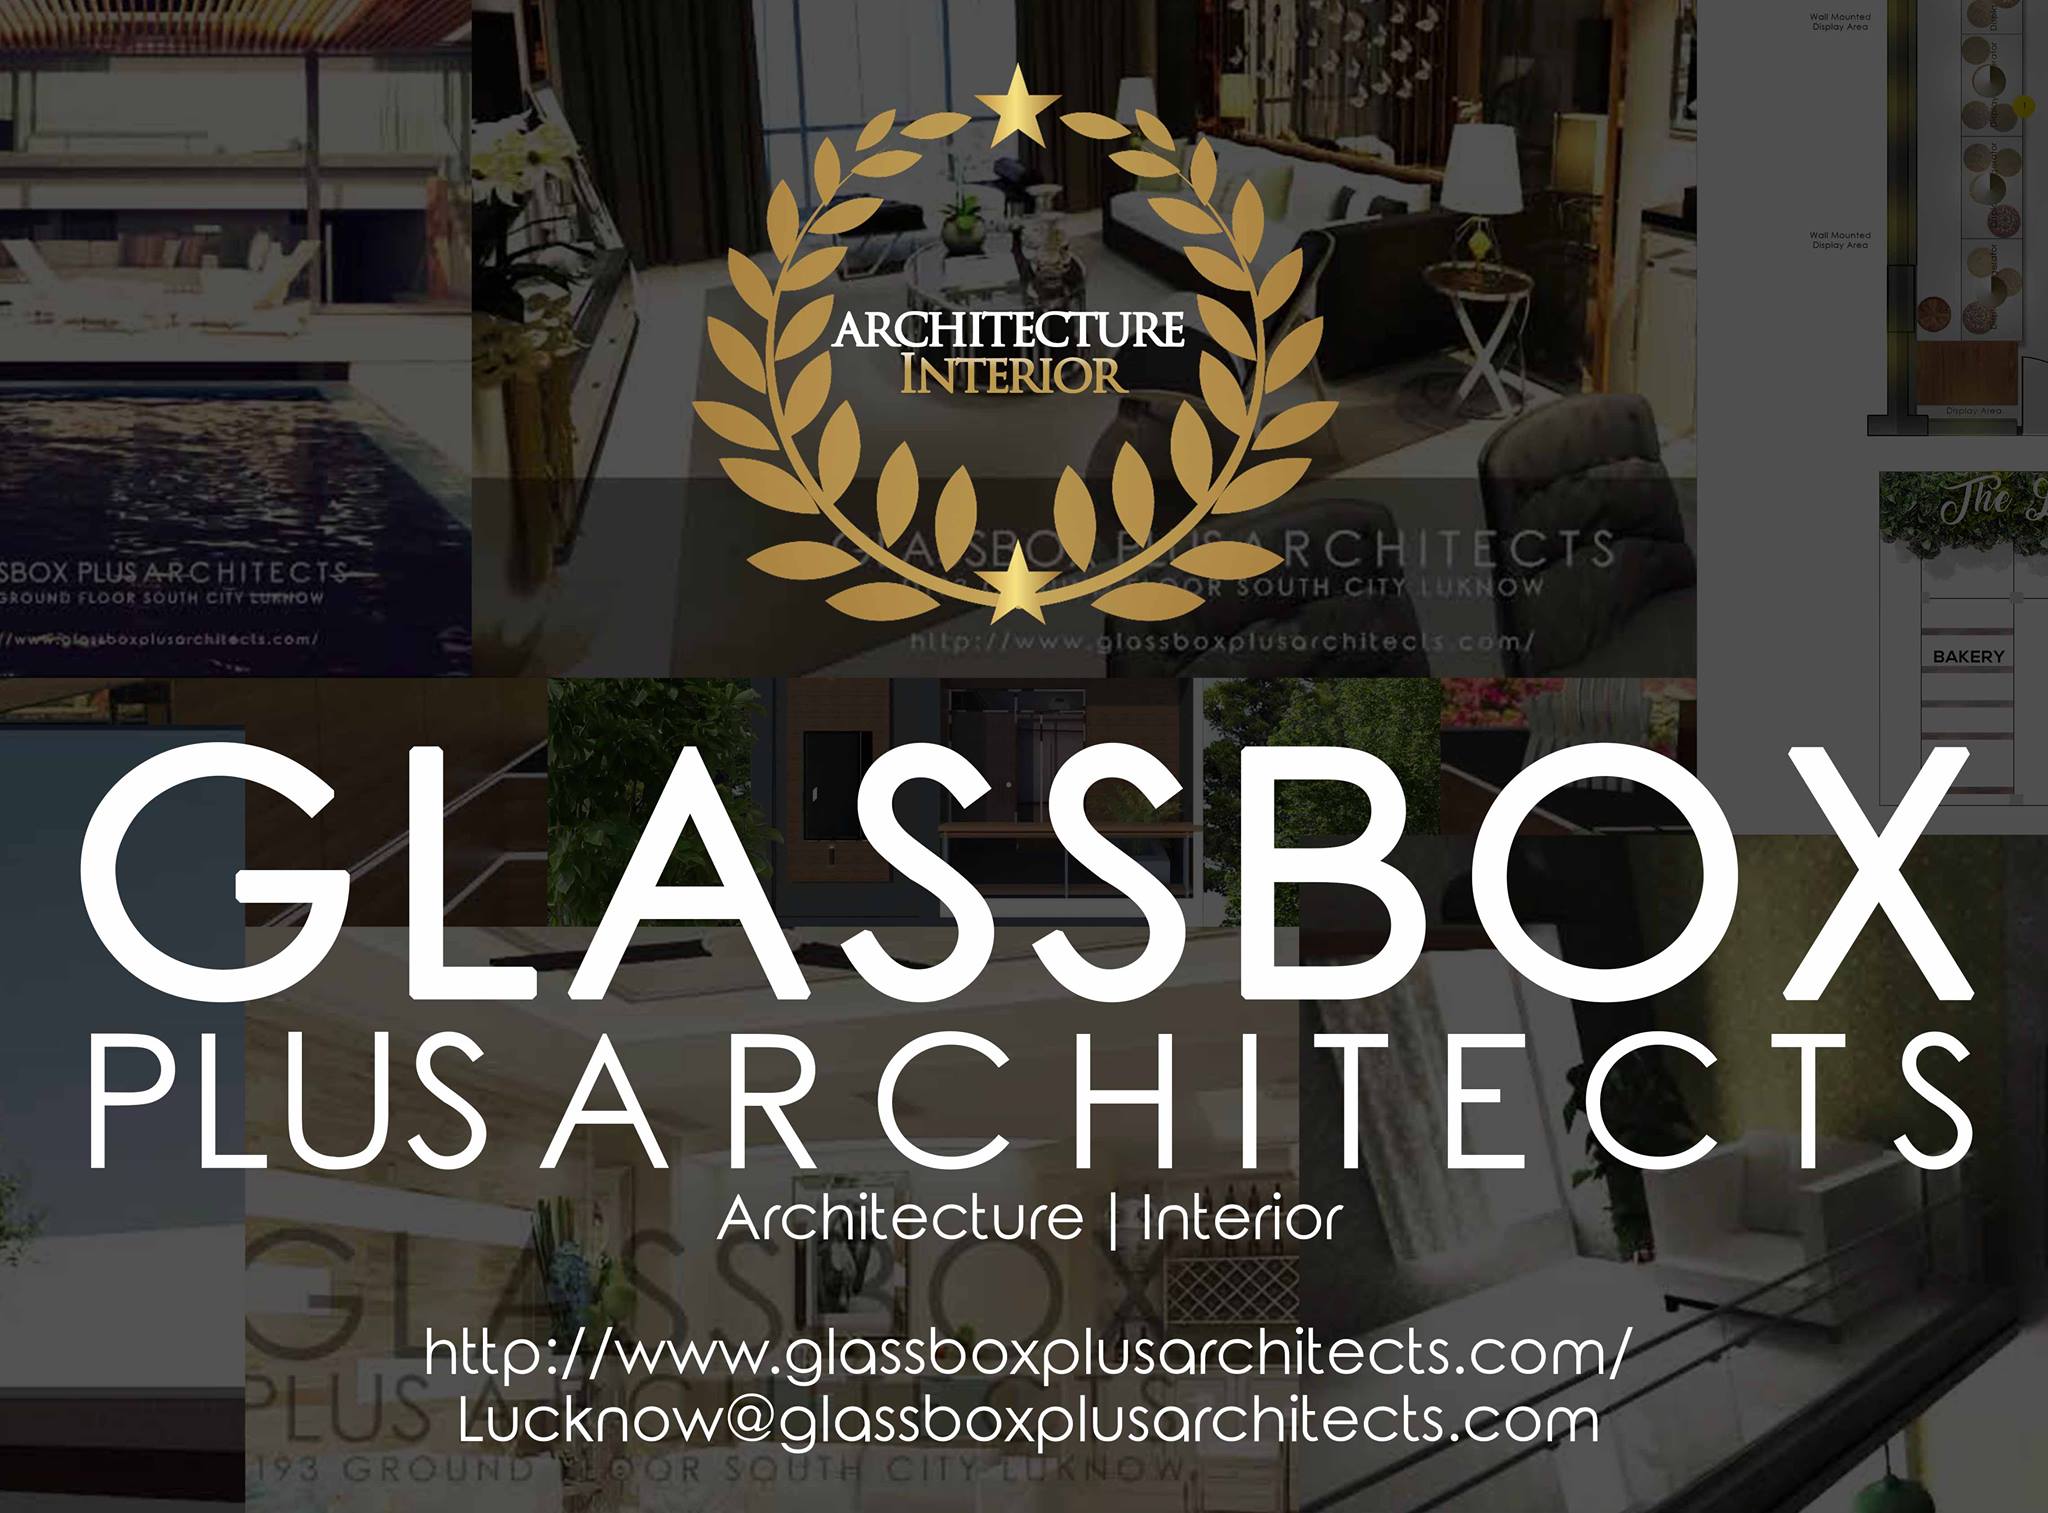 Glassbox Plus Architects|Architect|Professional Services